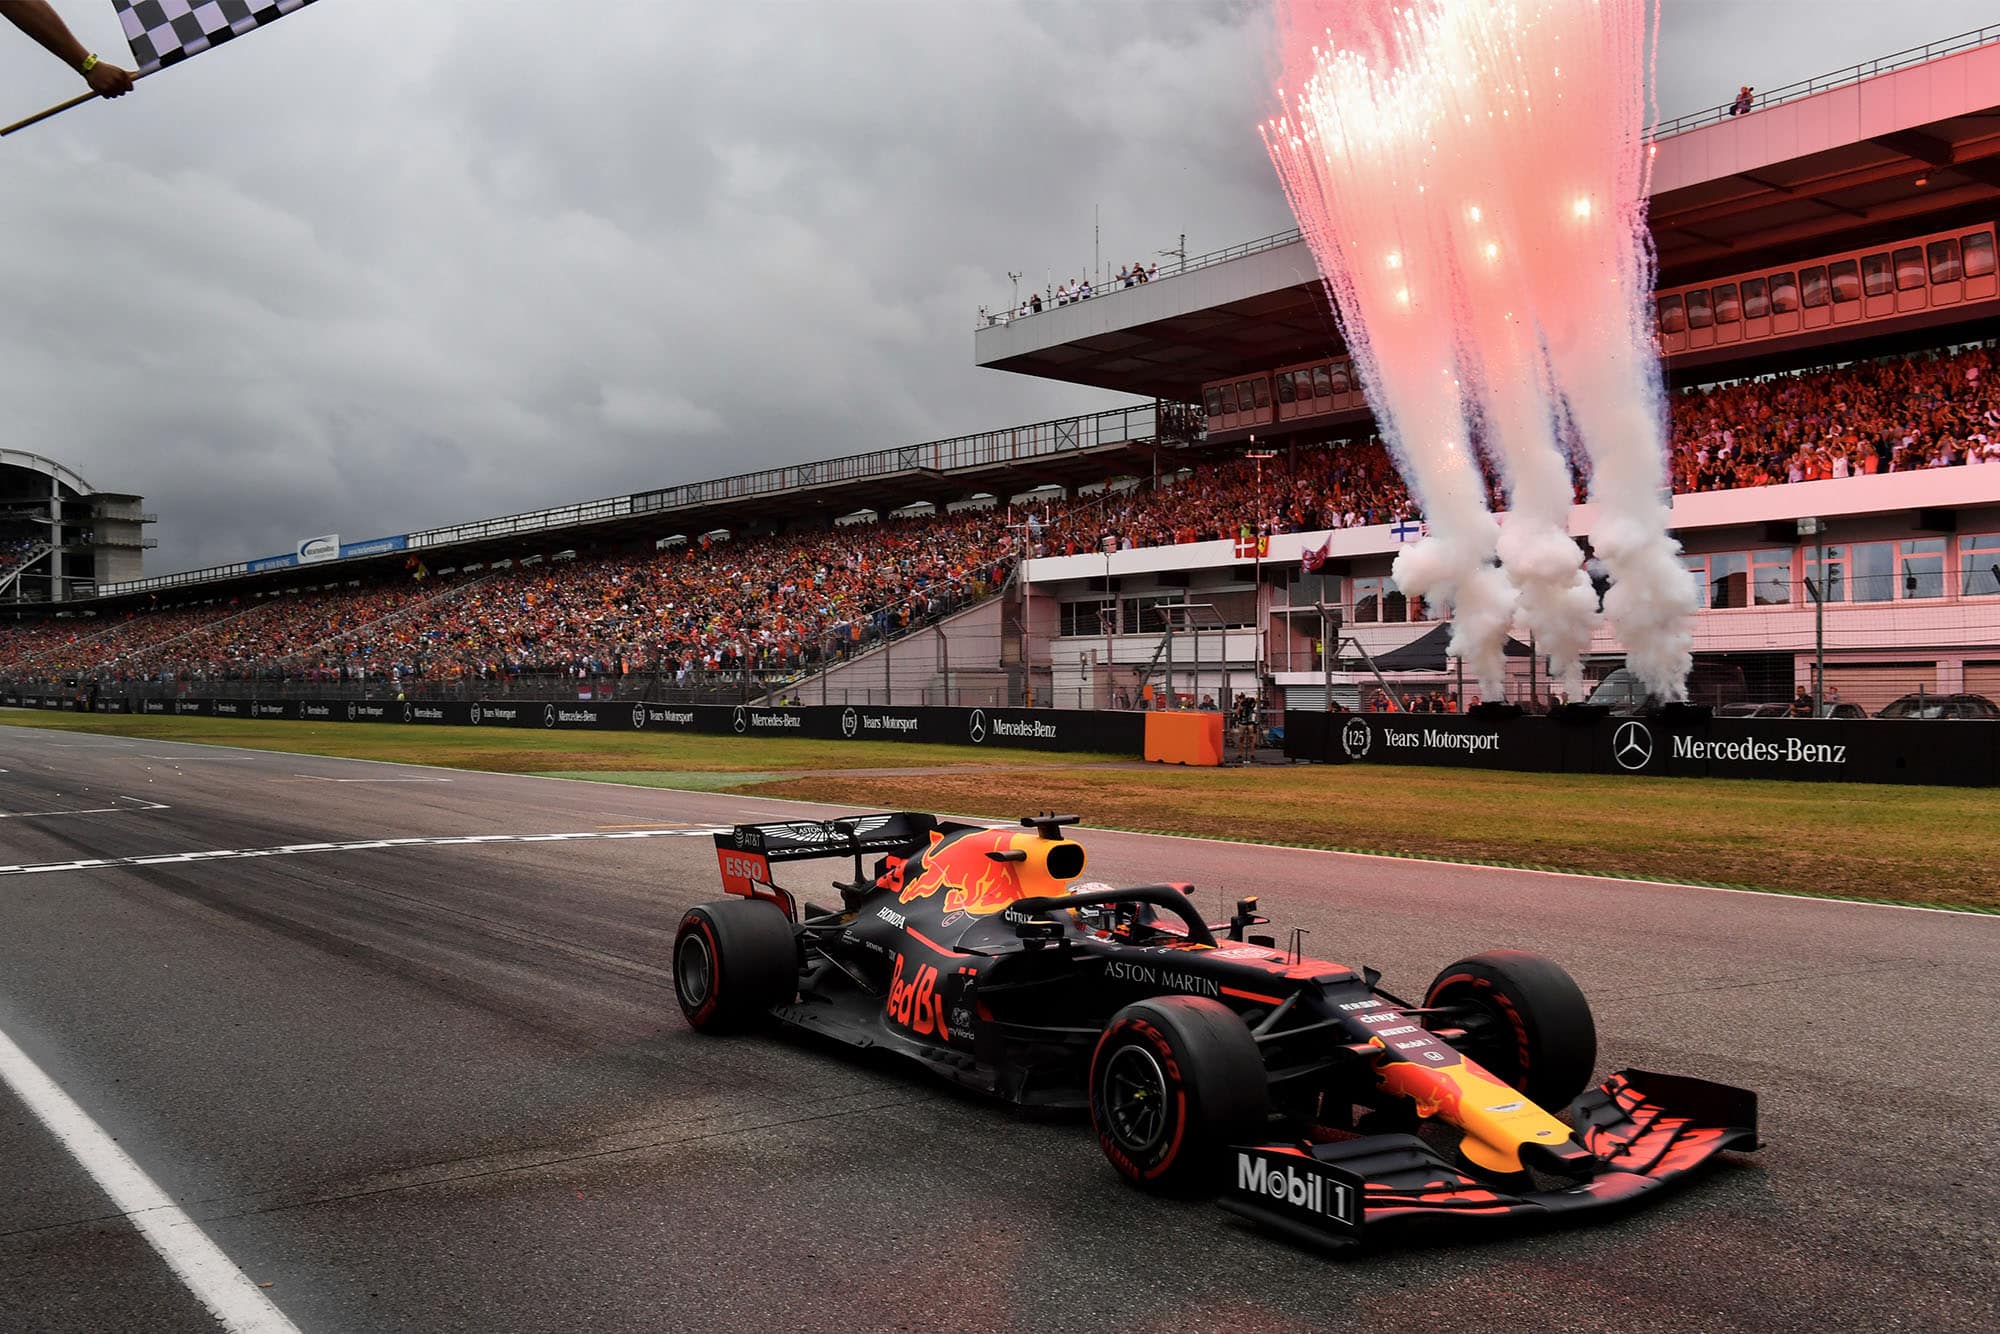 Max Verstappen crosses the line to win the 2019 German Grand Prix